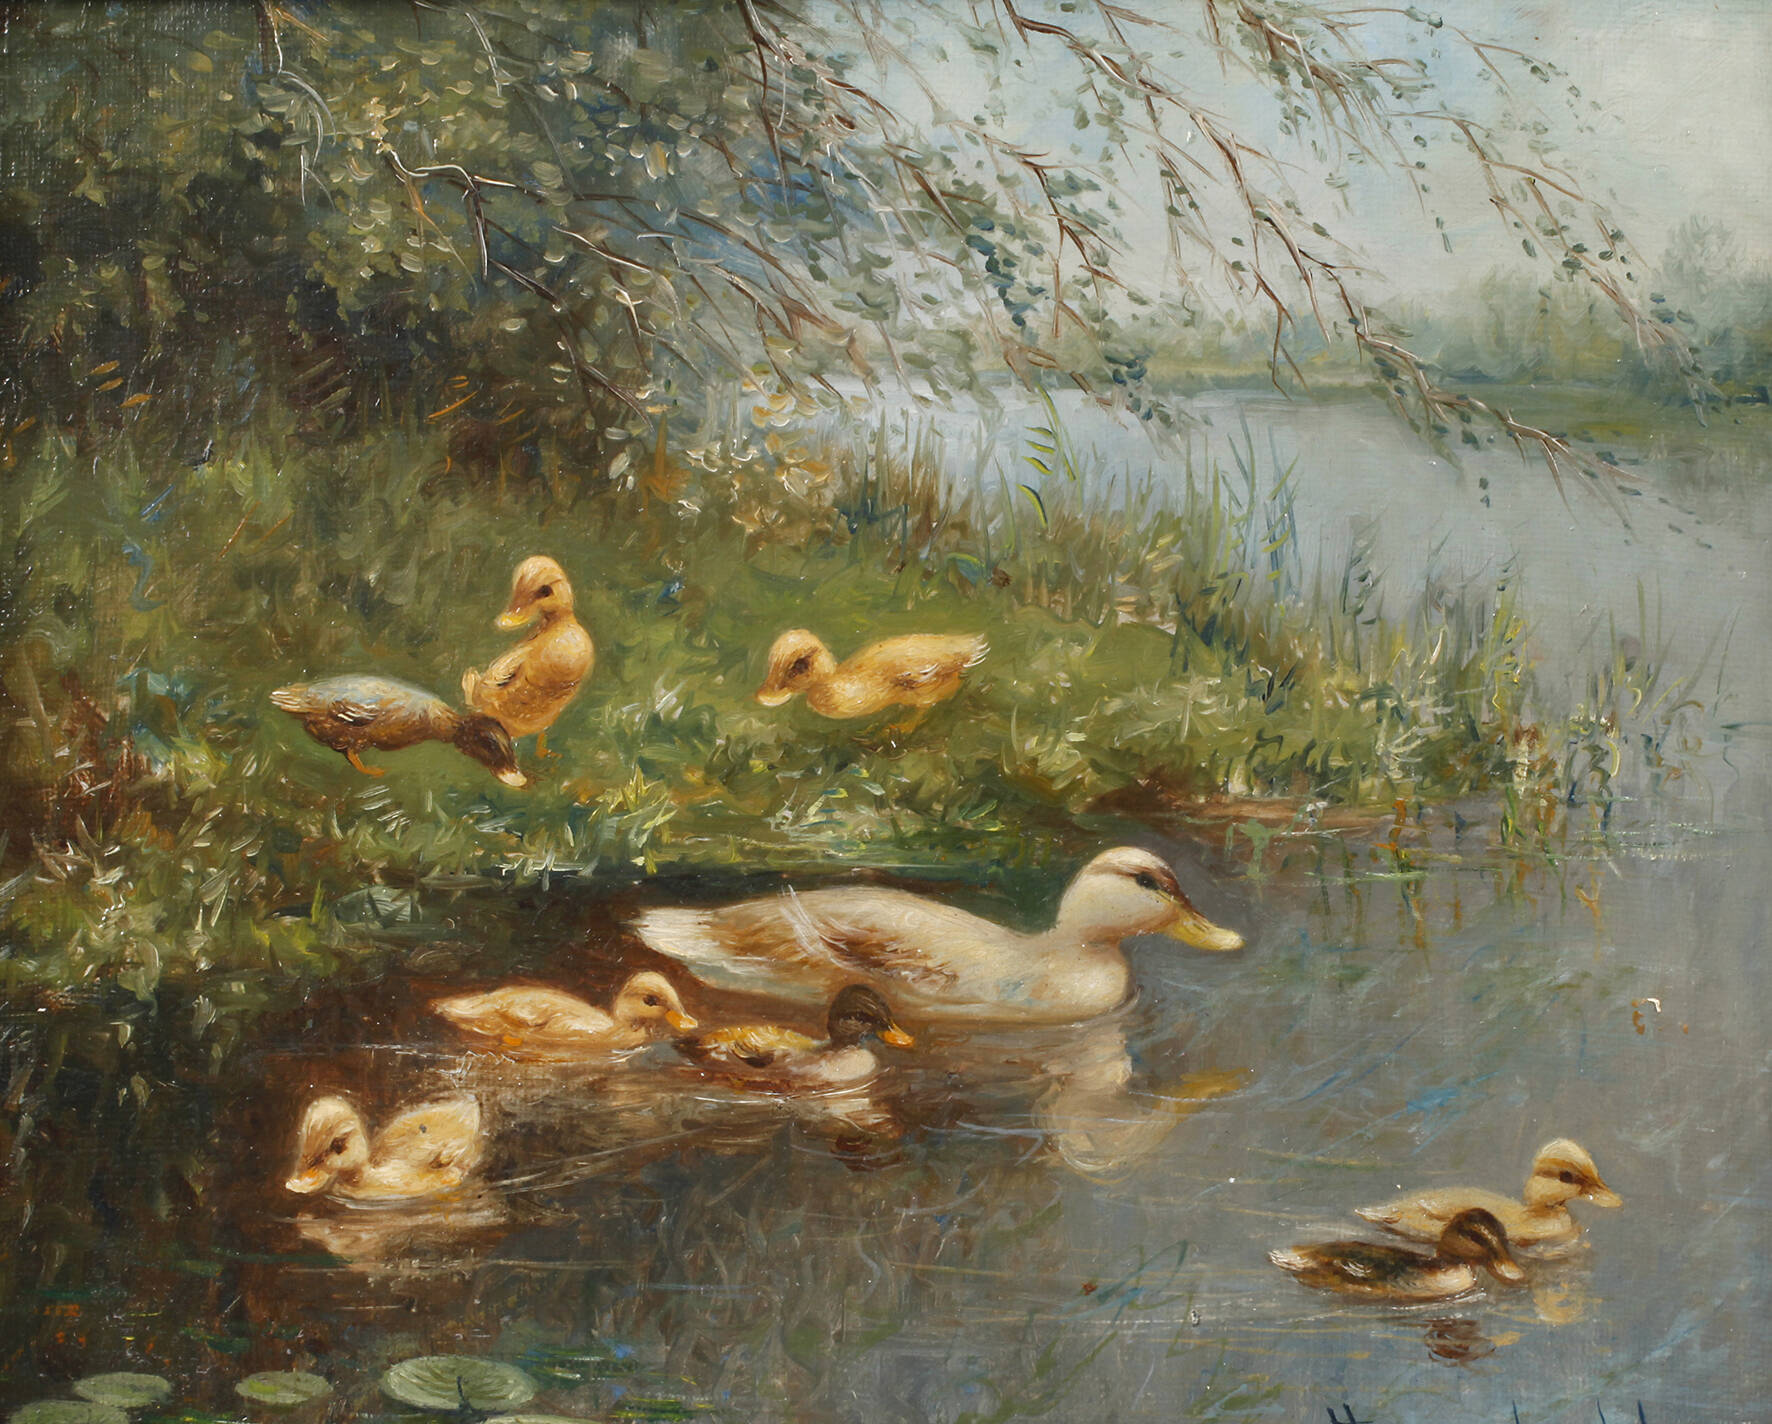 Hendrik Breedveld, Entenfamilie am Ufer